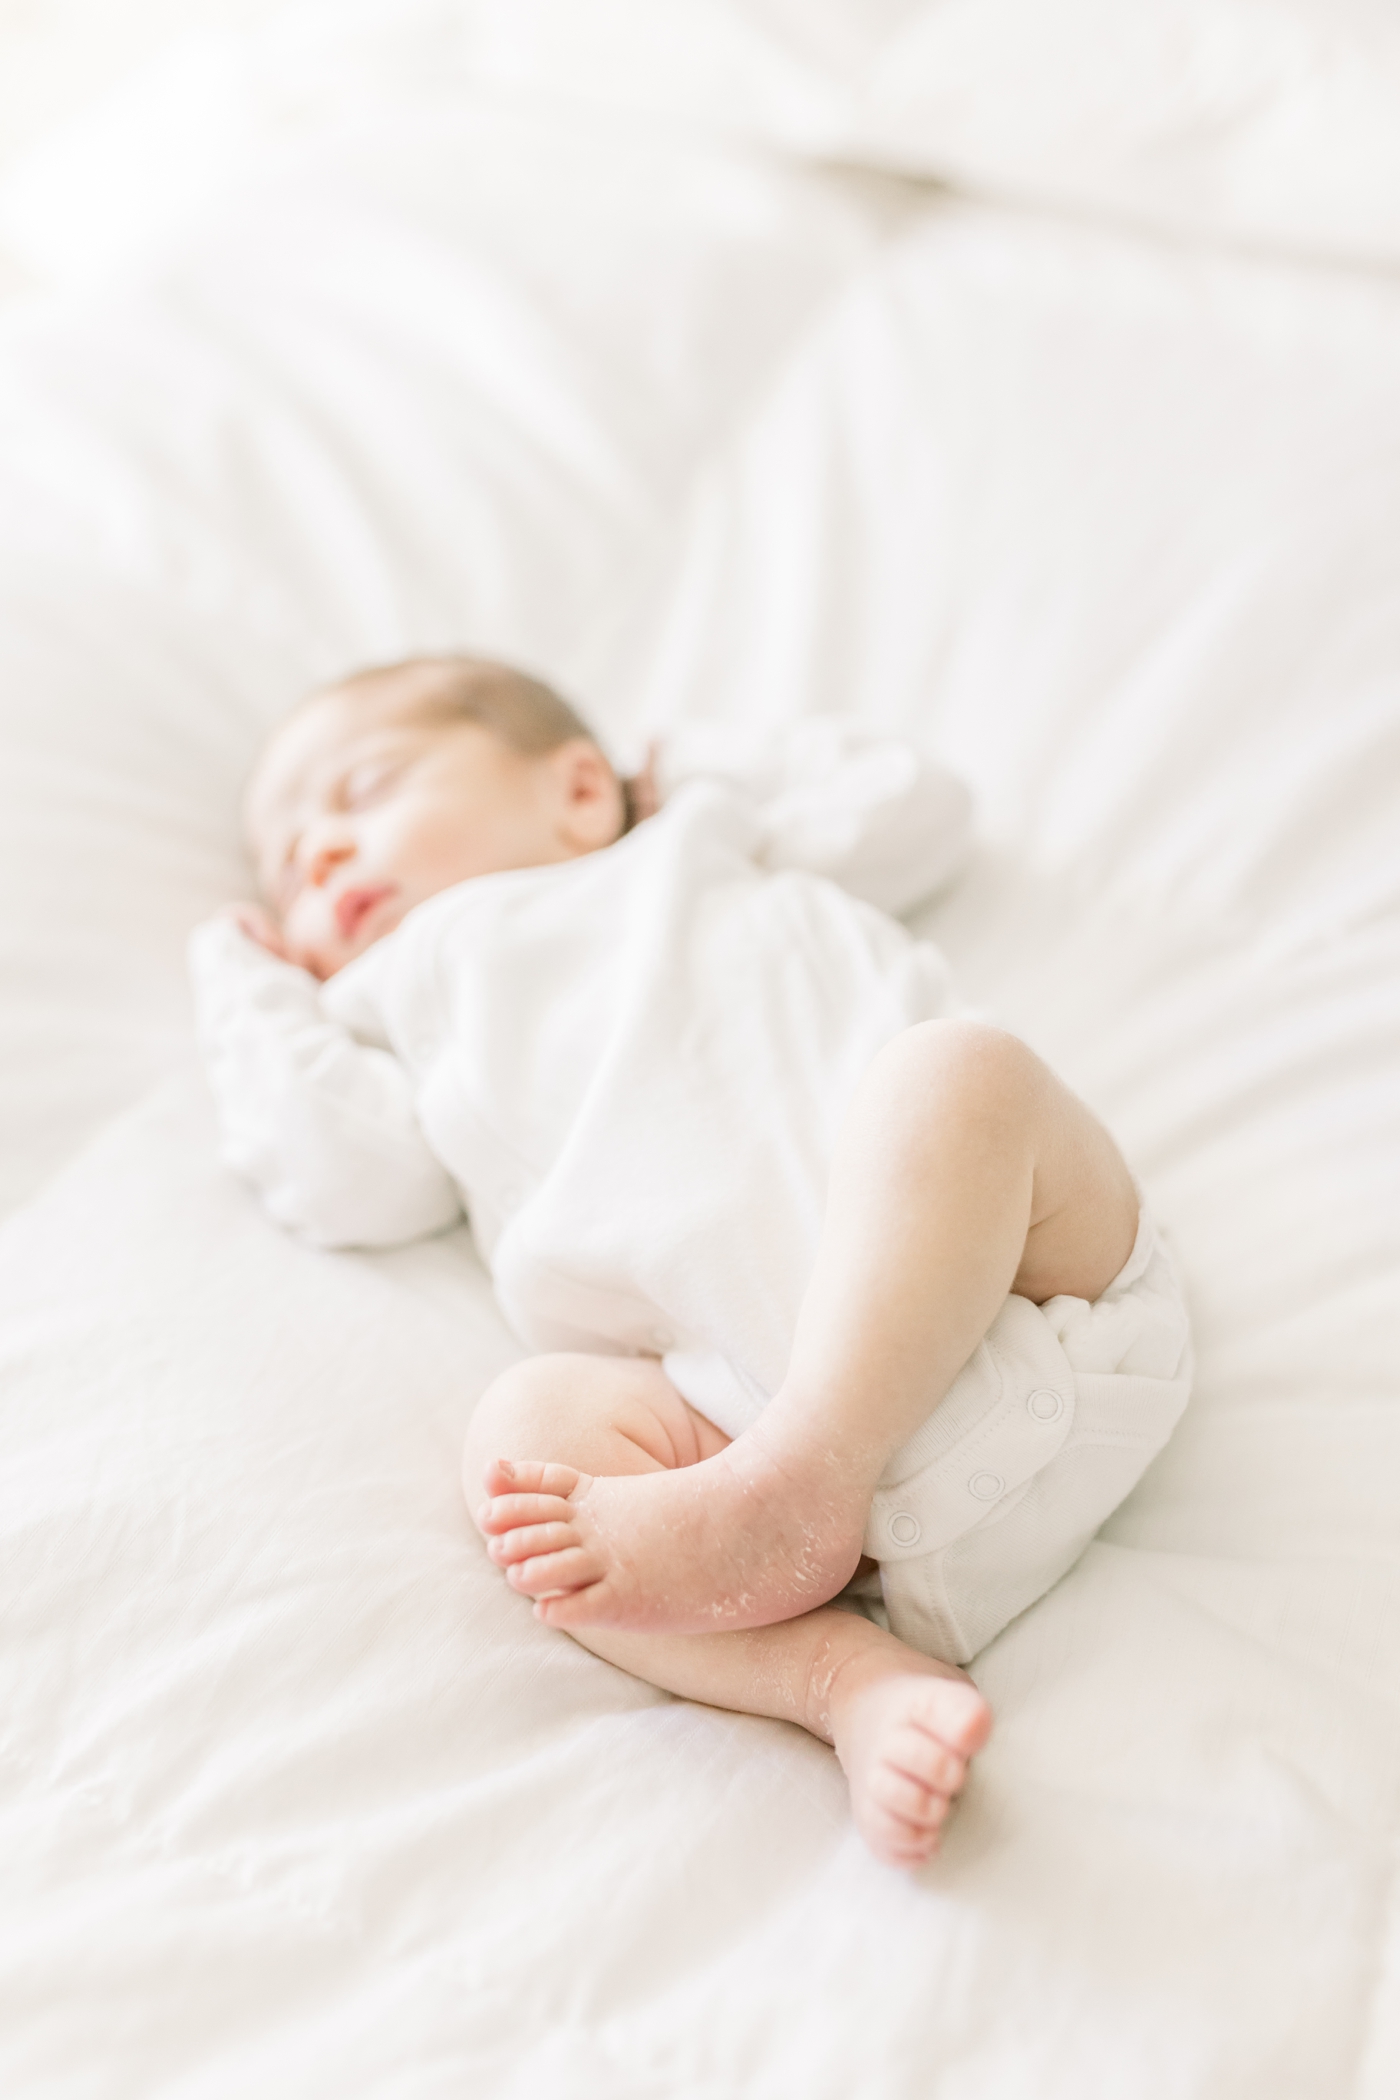 Detail of sleeping newborn baby's legs | Photo by Caitlyn Motycka Photography.